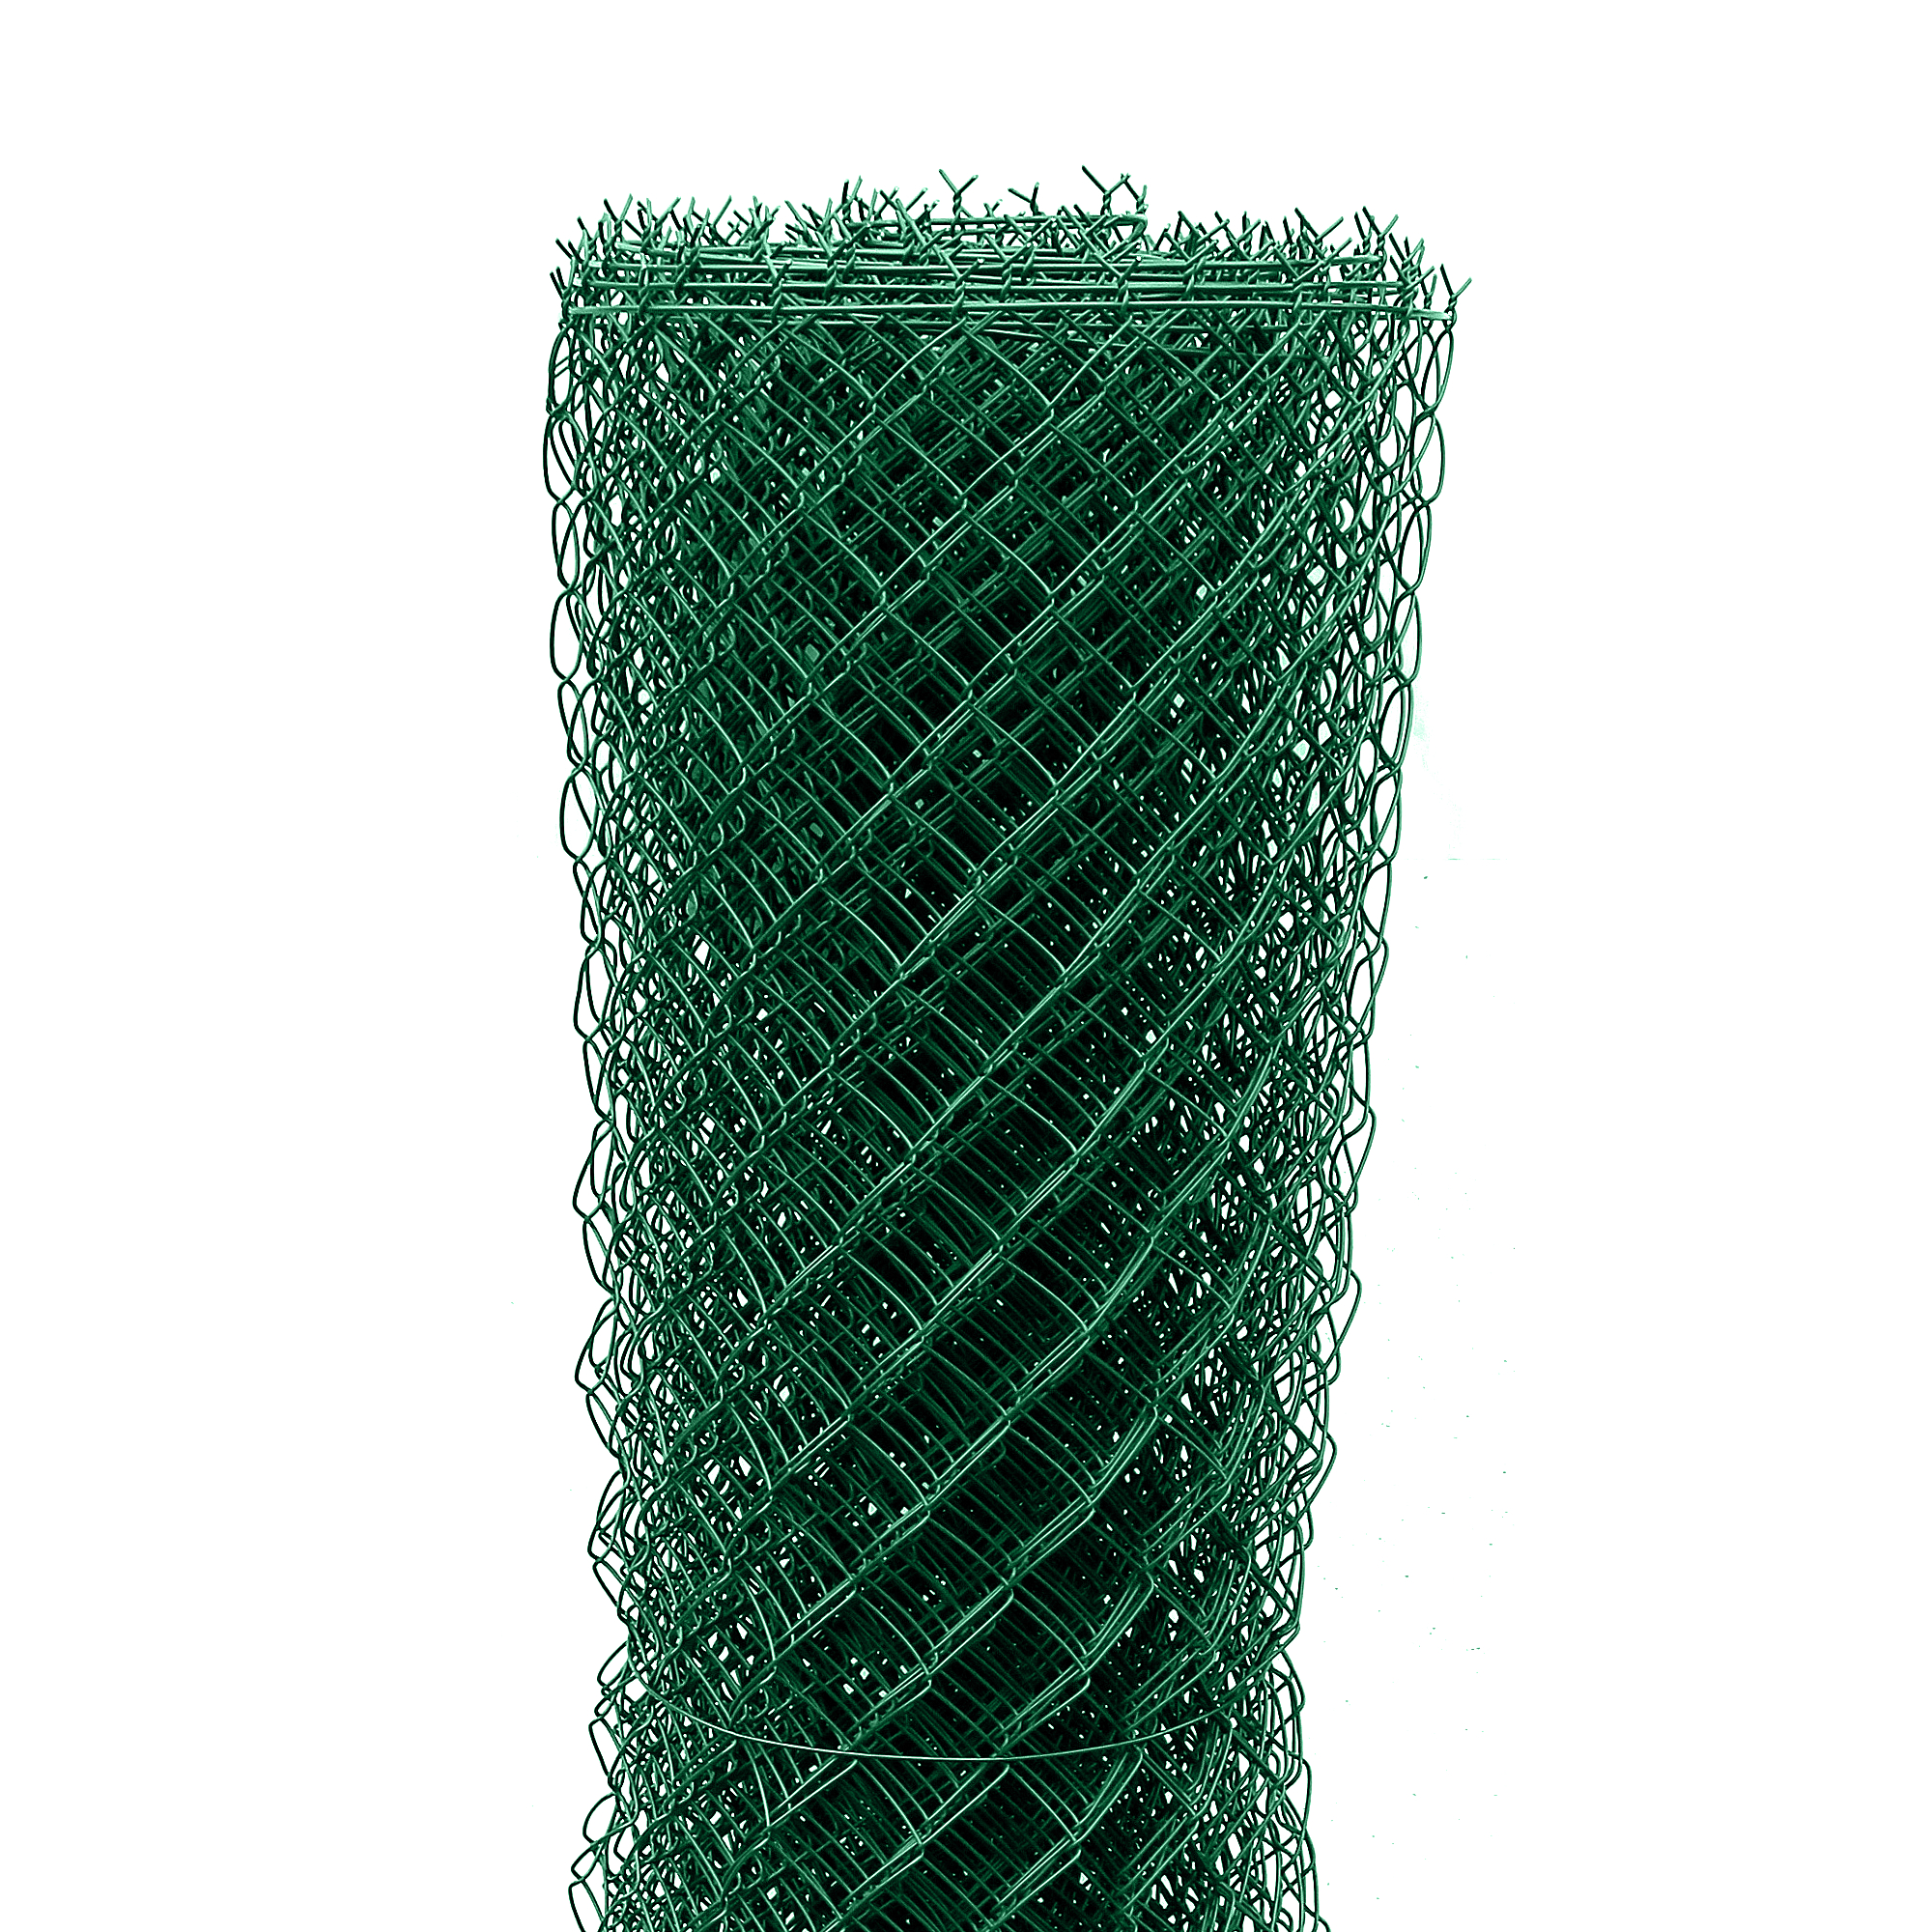 Pletivo čtyřhranné Ideal Zn + PVC Zapletené zelené výška 2,0 m 25 m/role